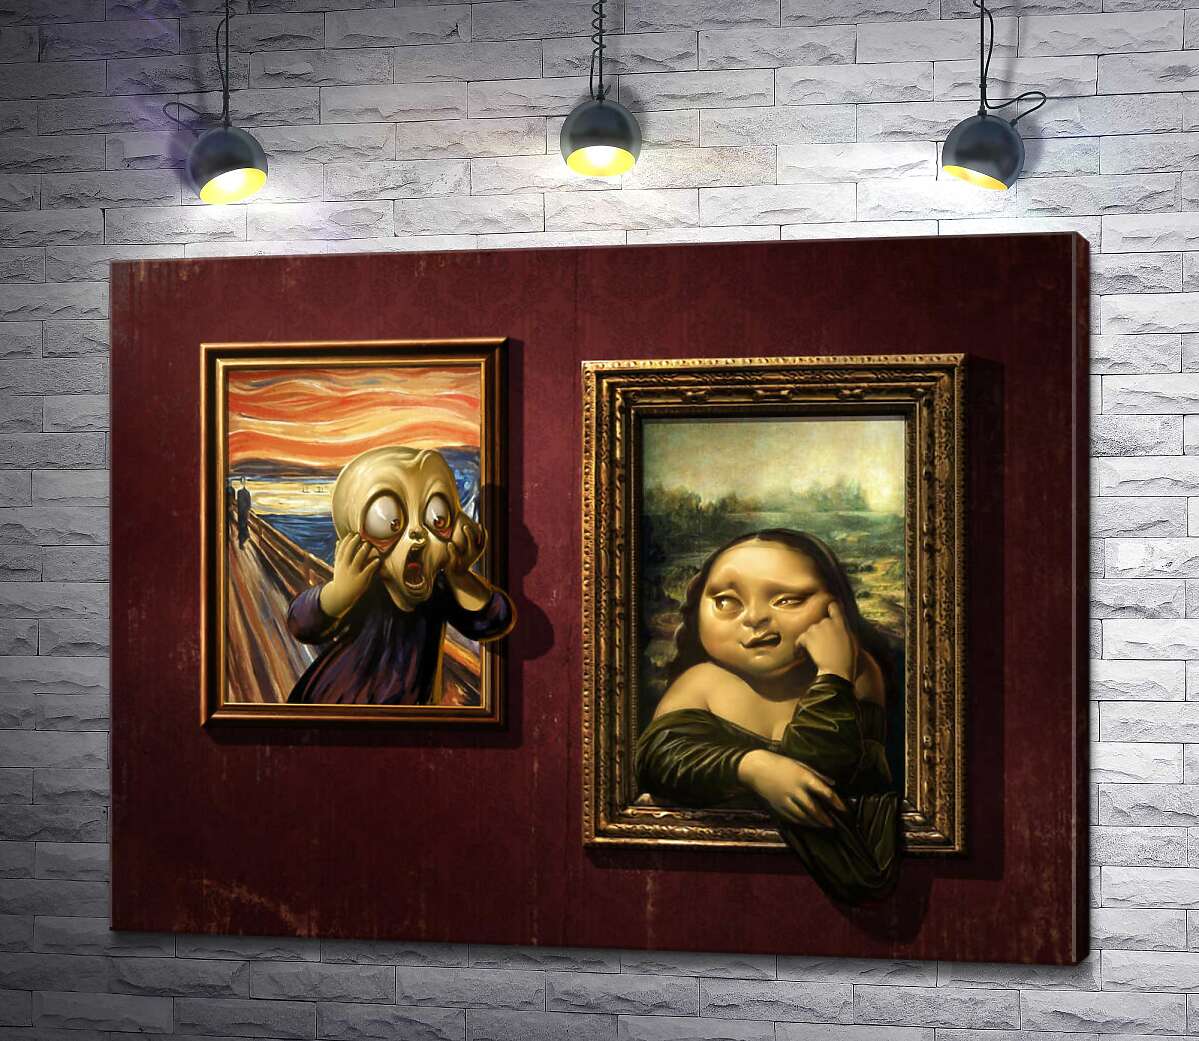 картина Битва картин: "Крик" (Skrik) против "Моны Лизы" (Mona Lisa)